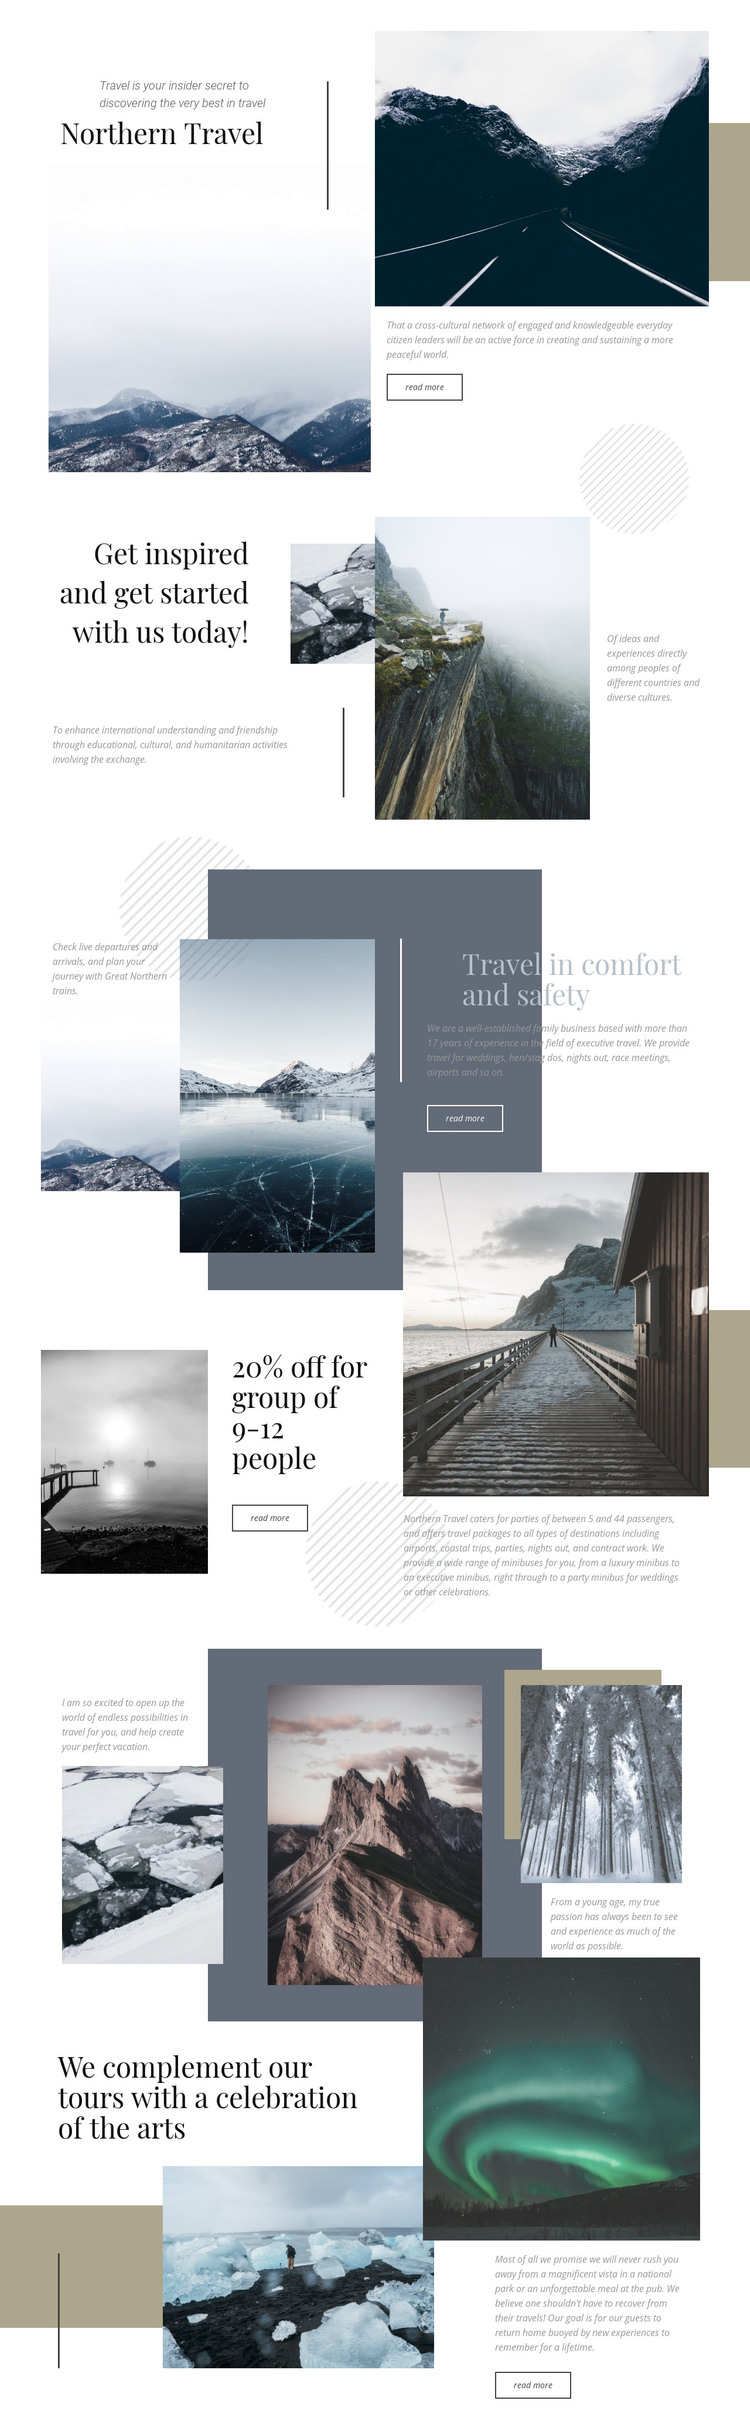 Northern Travel Homepage Design